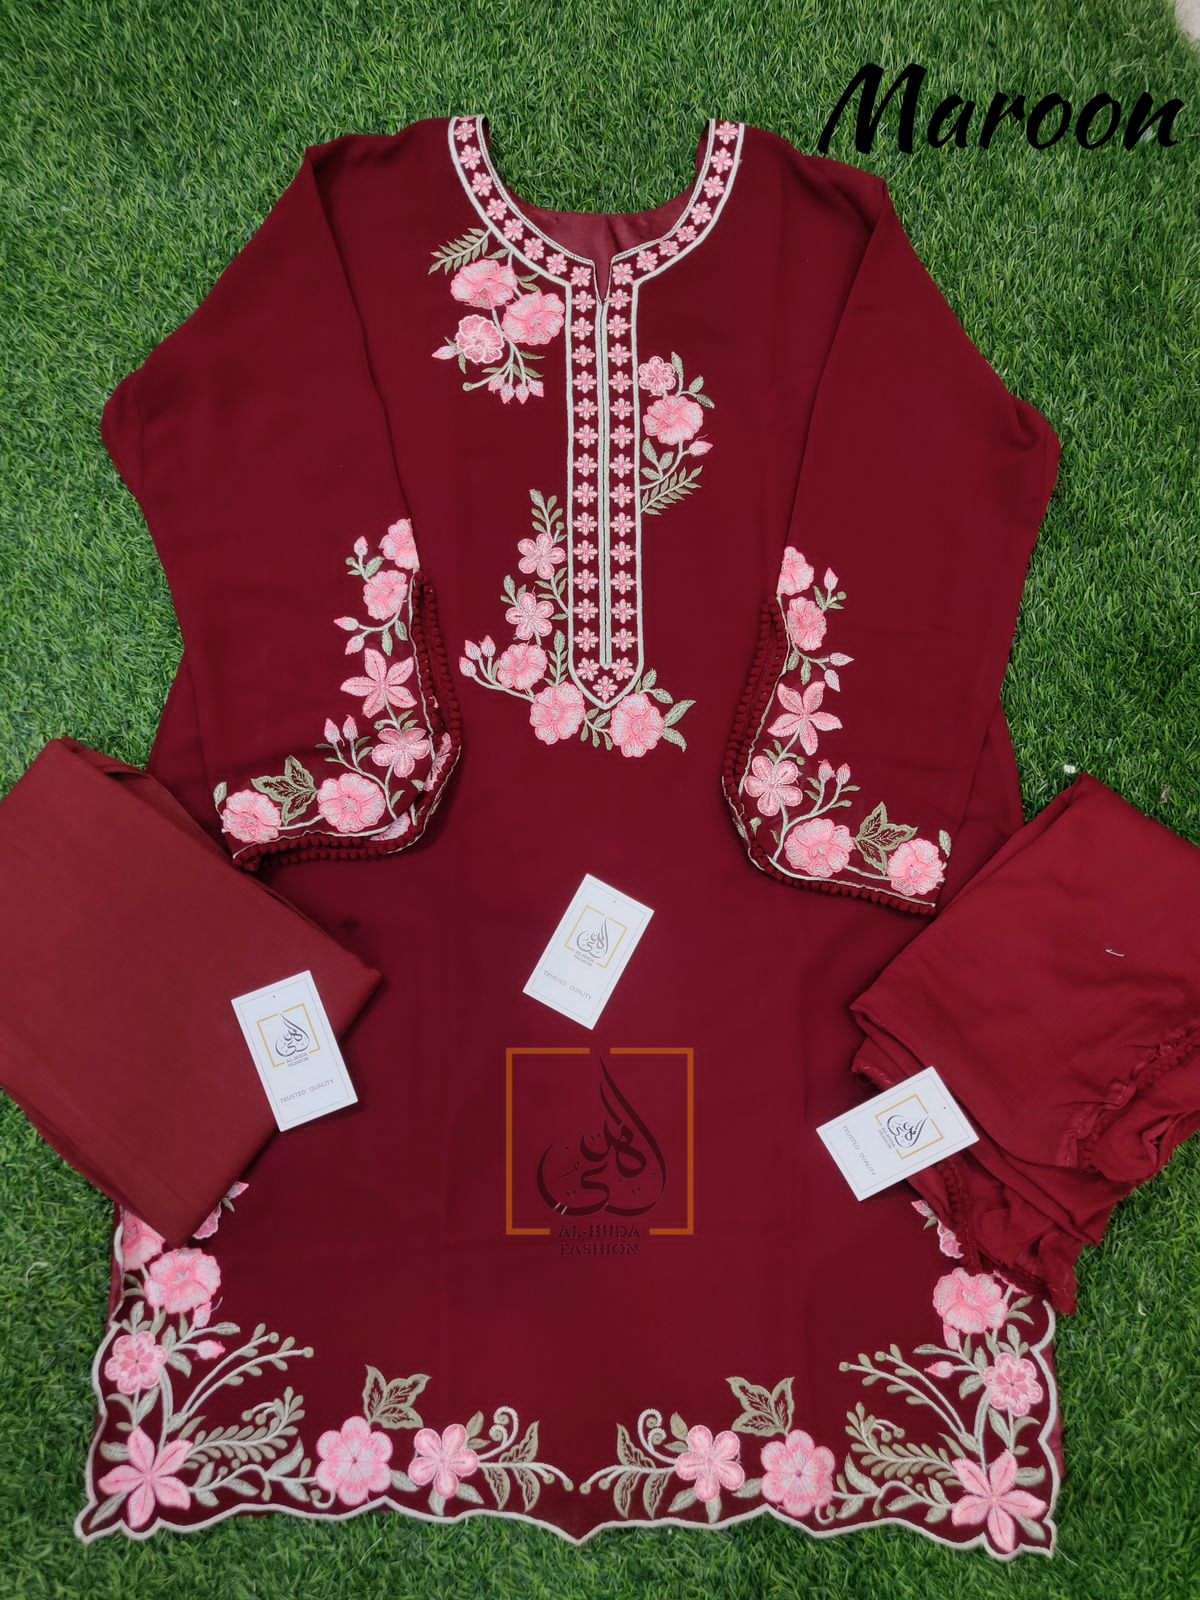 al huda 108 series latest designer pakistani salwar suits online wholesaler surat 